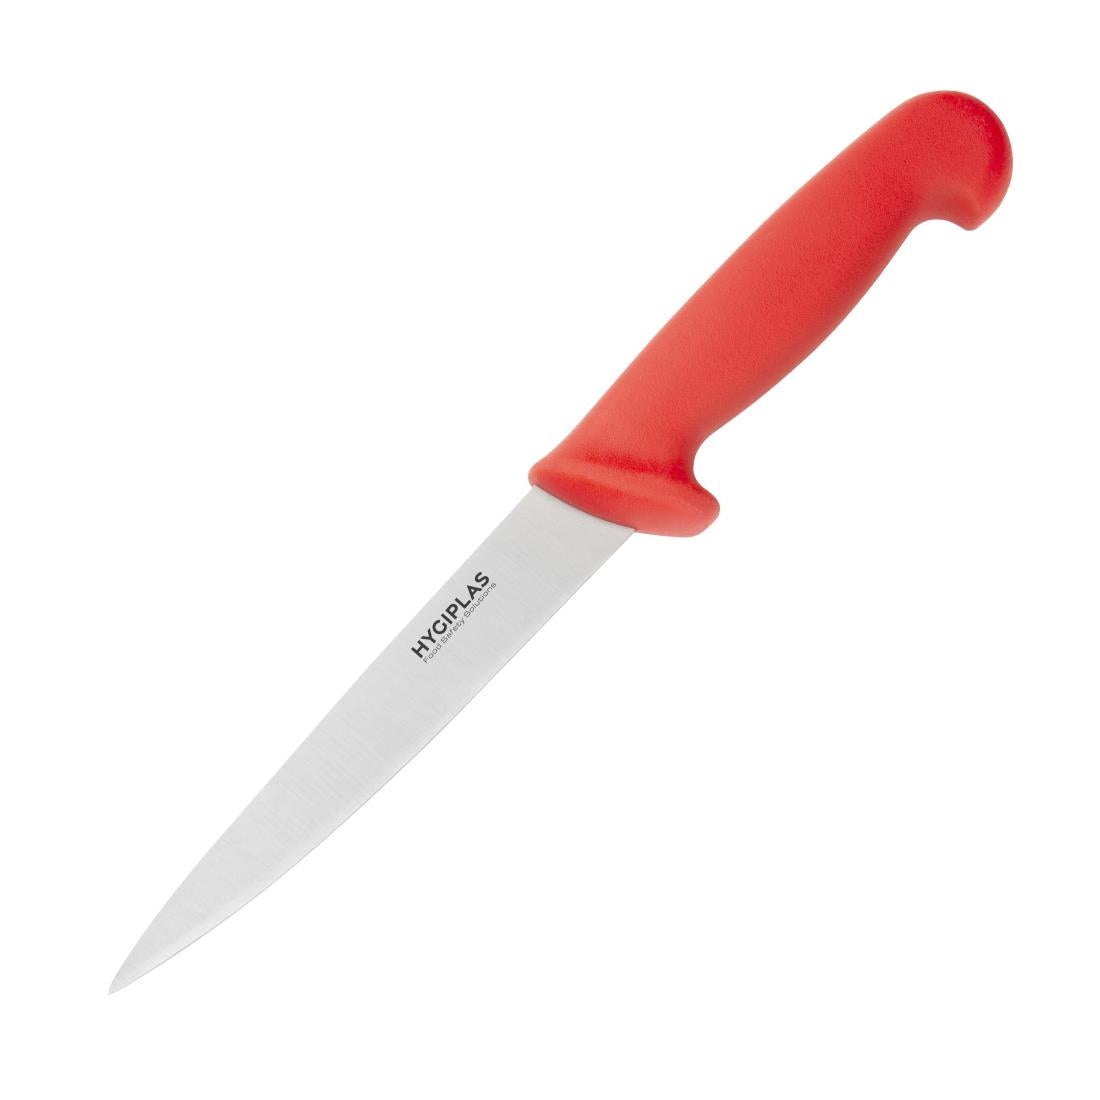 C889 Hygiplas Fillet Knife Red 15cm JD Catering Equipment Solutions Ltd